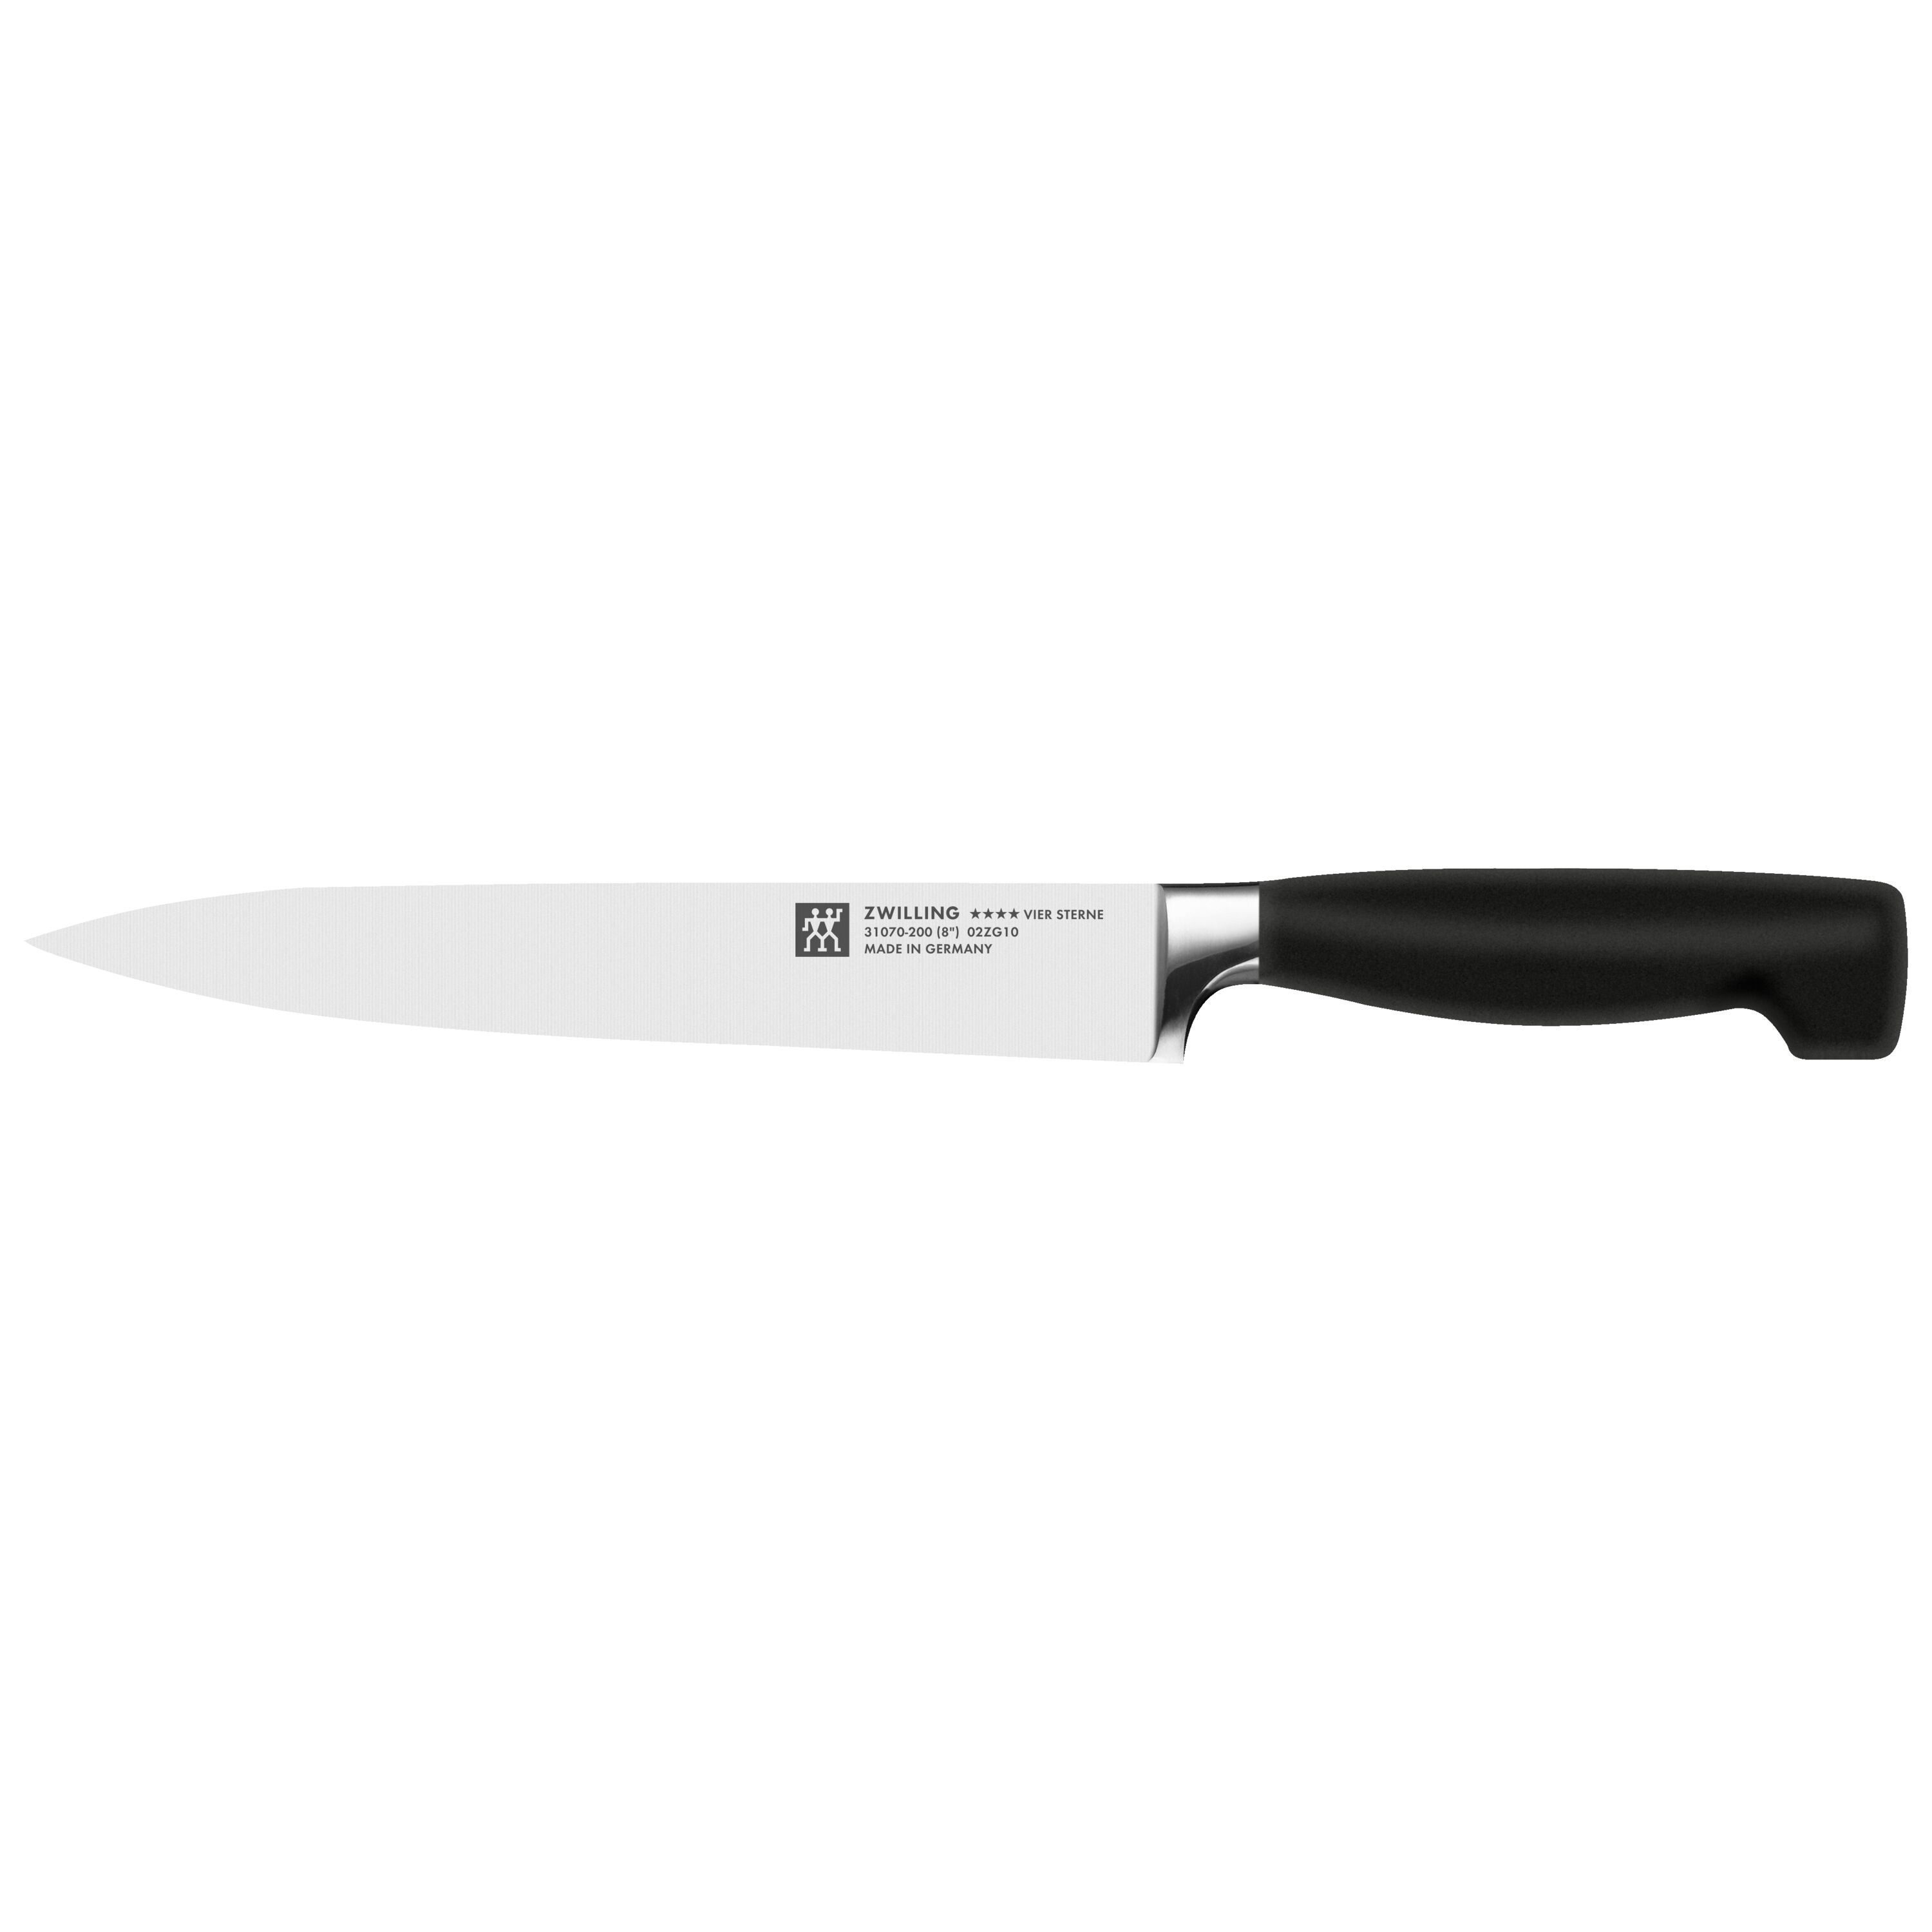 ZWILLING Pro 2-pc amp Carving Knife & Fork Set